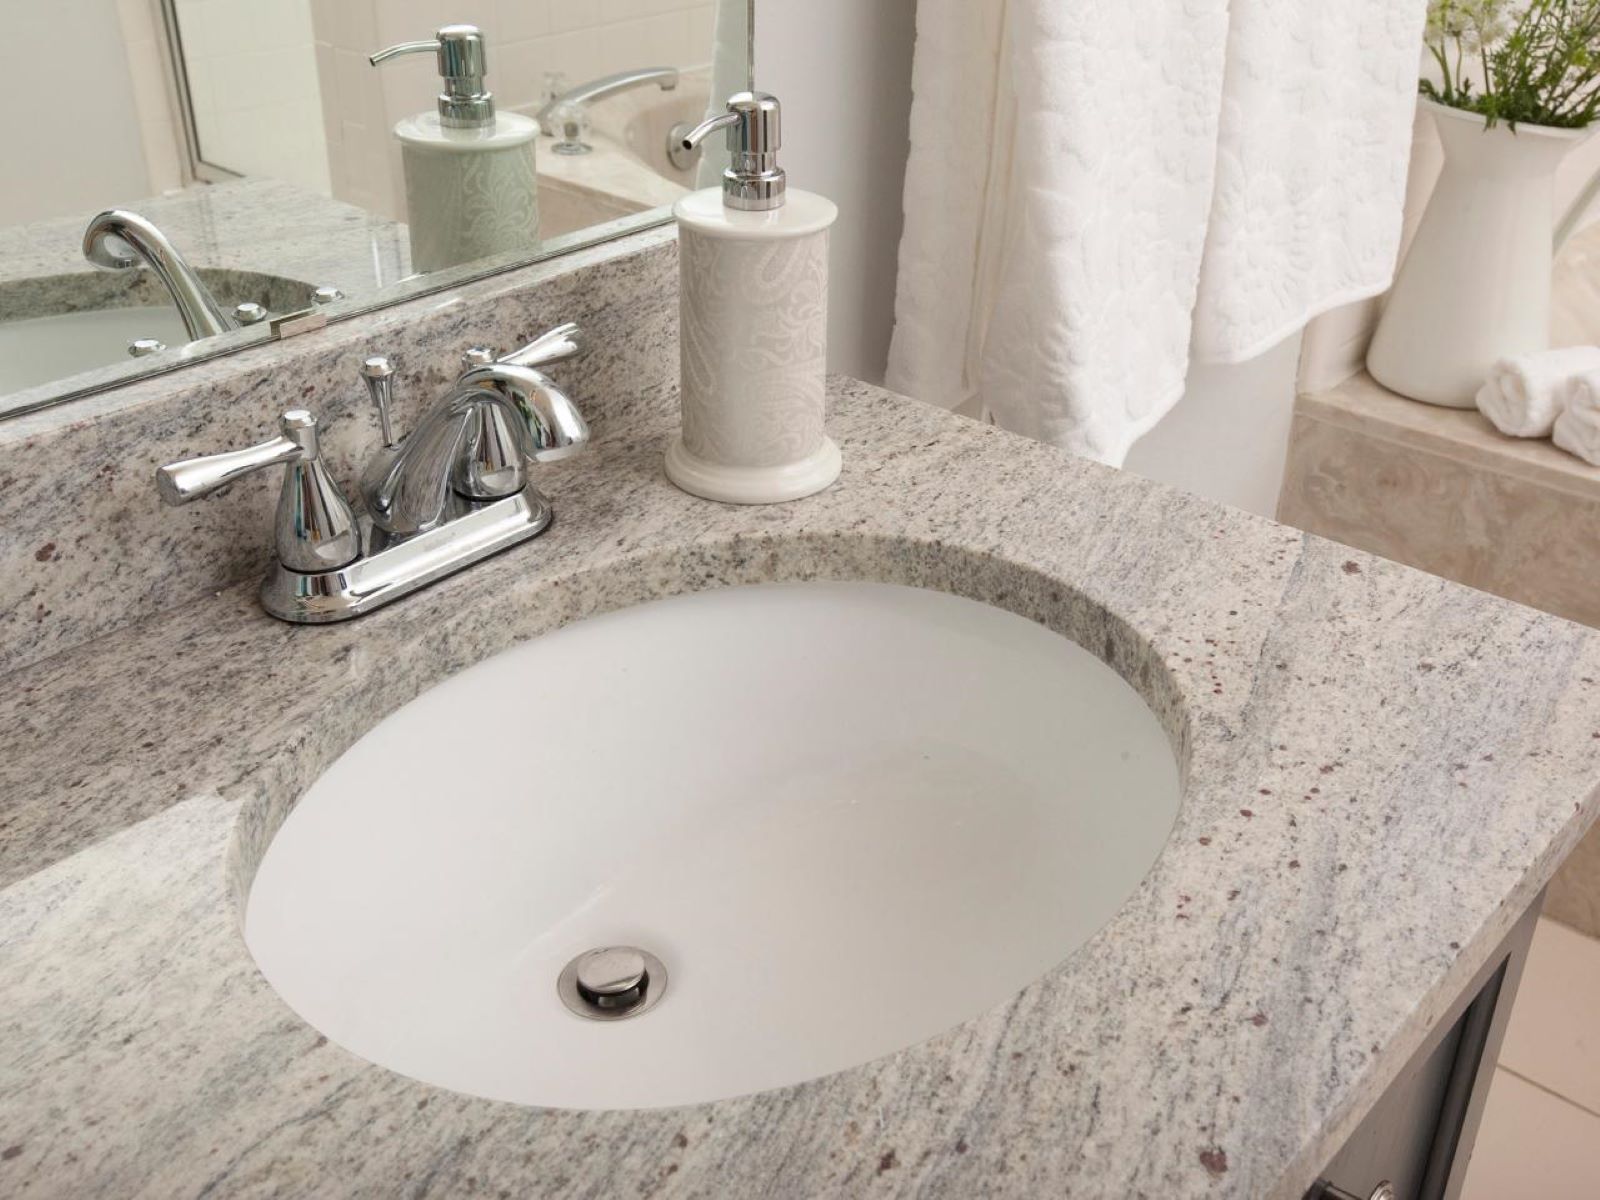 How To Clean Granite Countertops In Bathroom